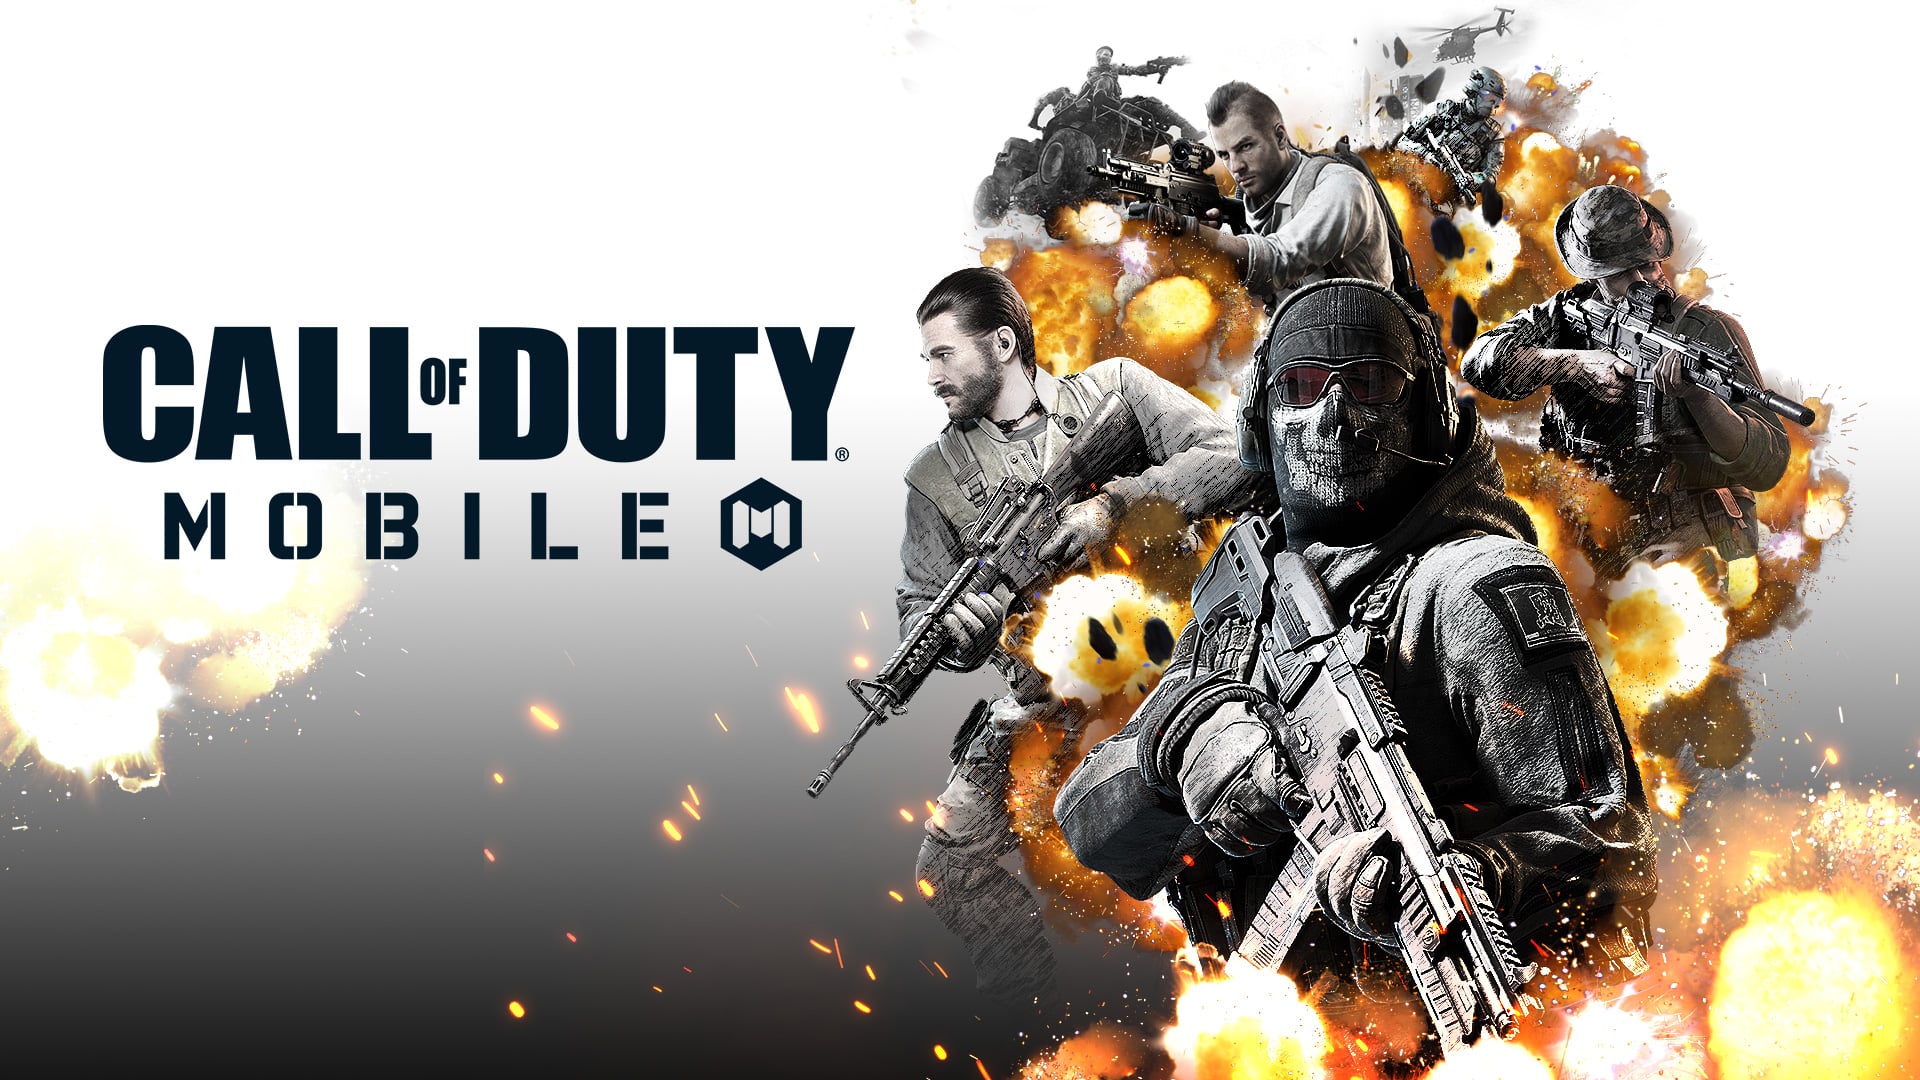 Plakat für Call of Duty-Handy